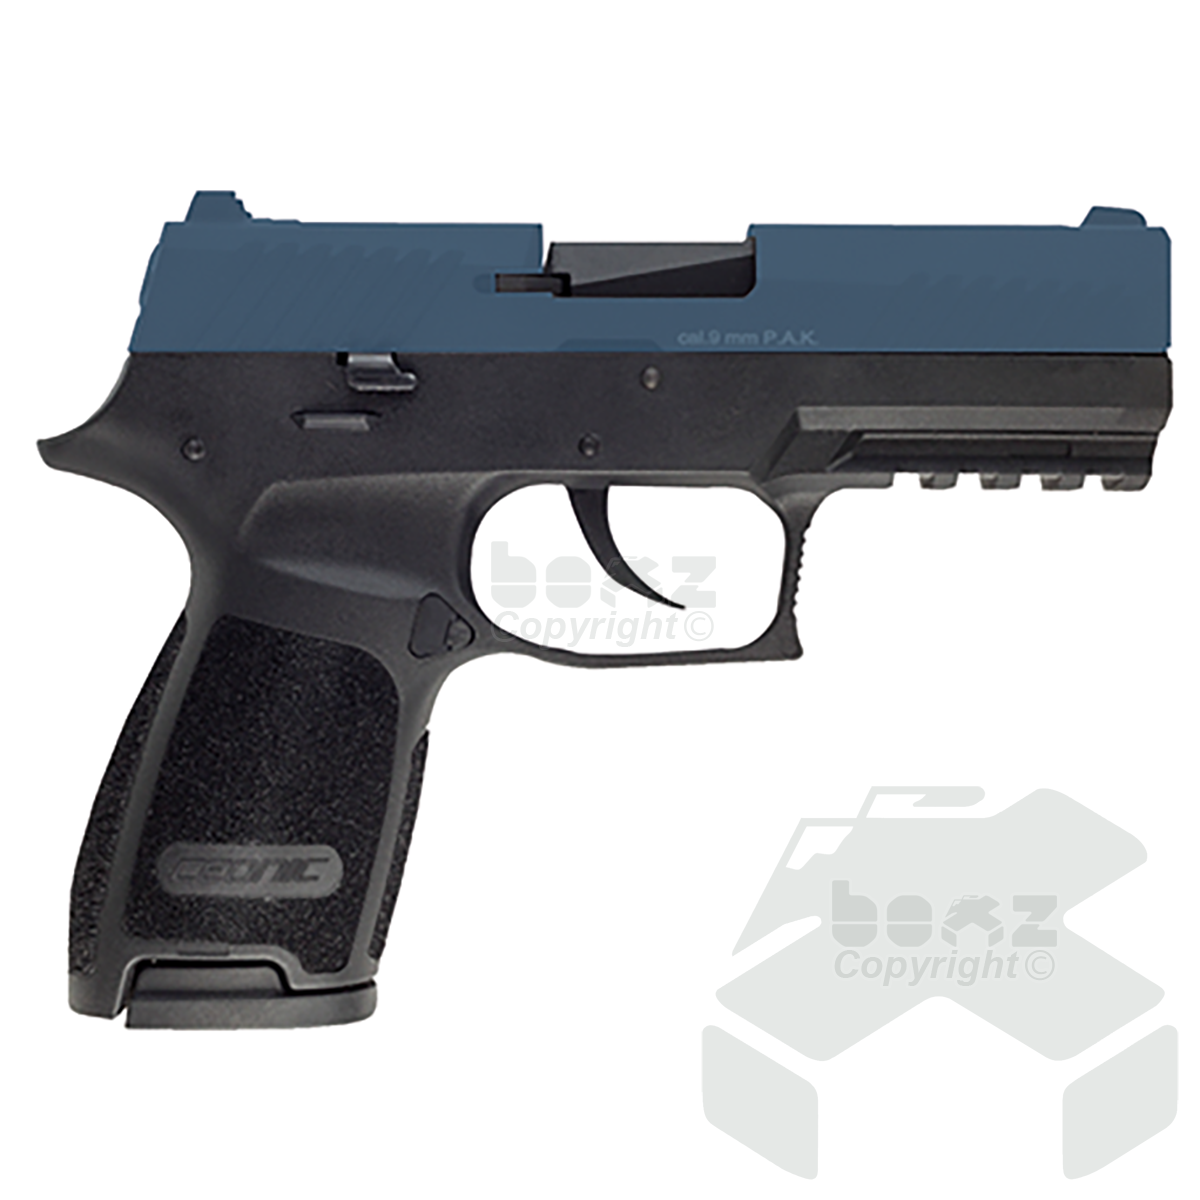 Ceonic P320 Blank Firing Pistol - 9mm - Blue Black